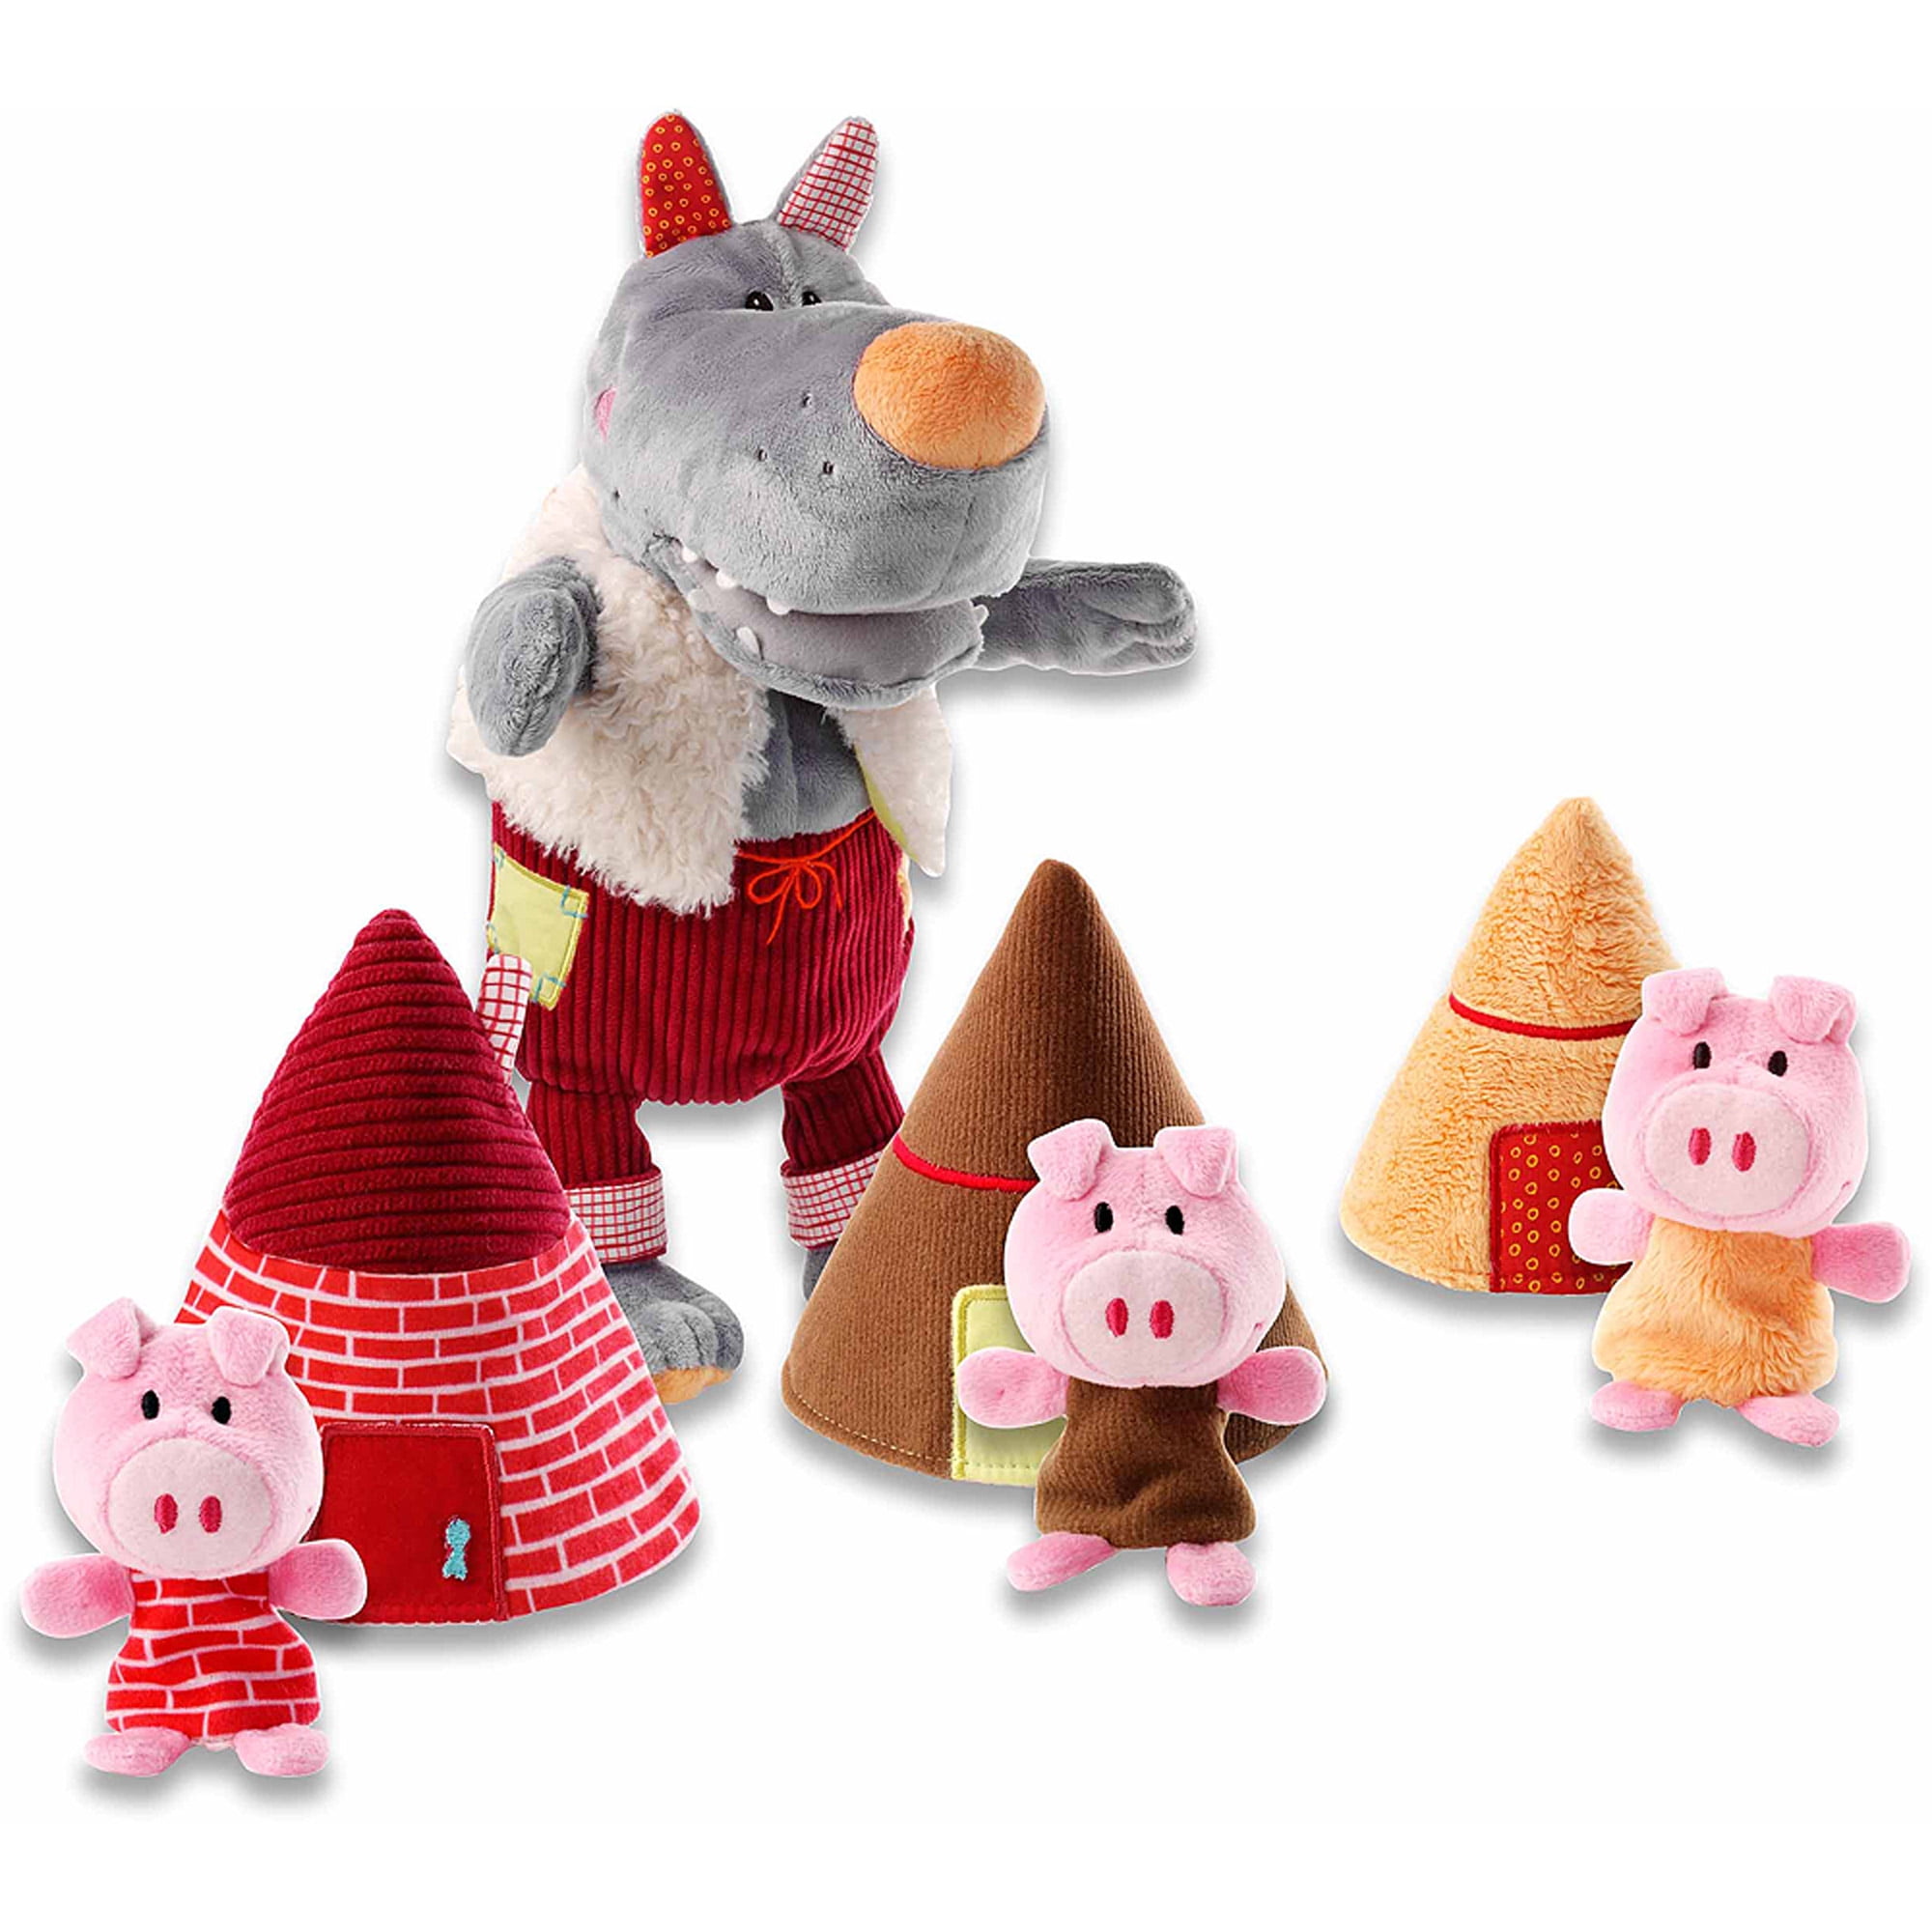 3 little pigs toy set